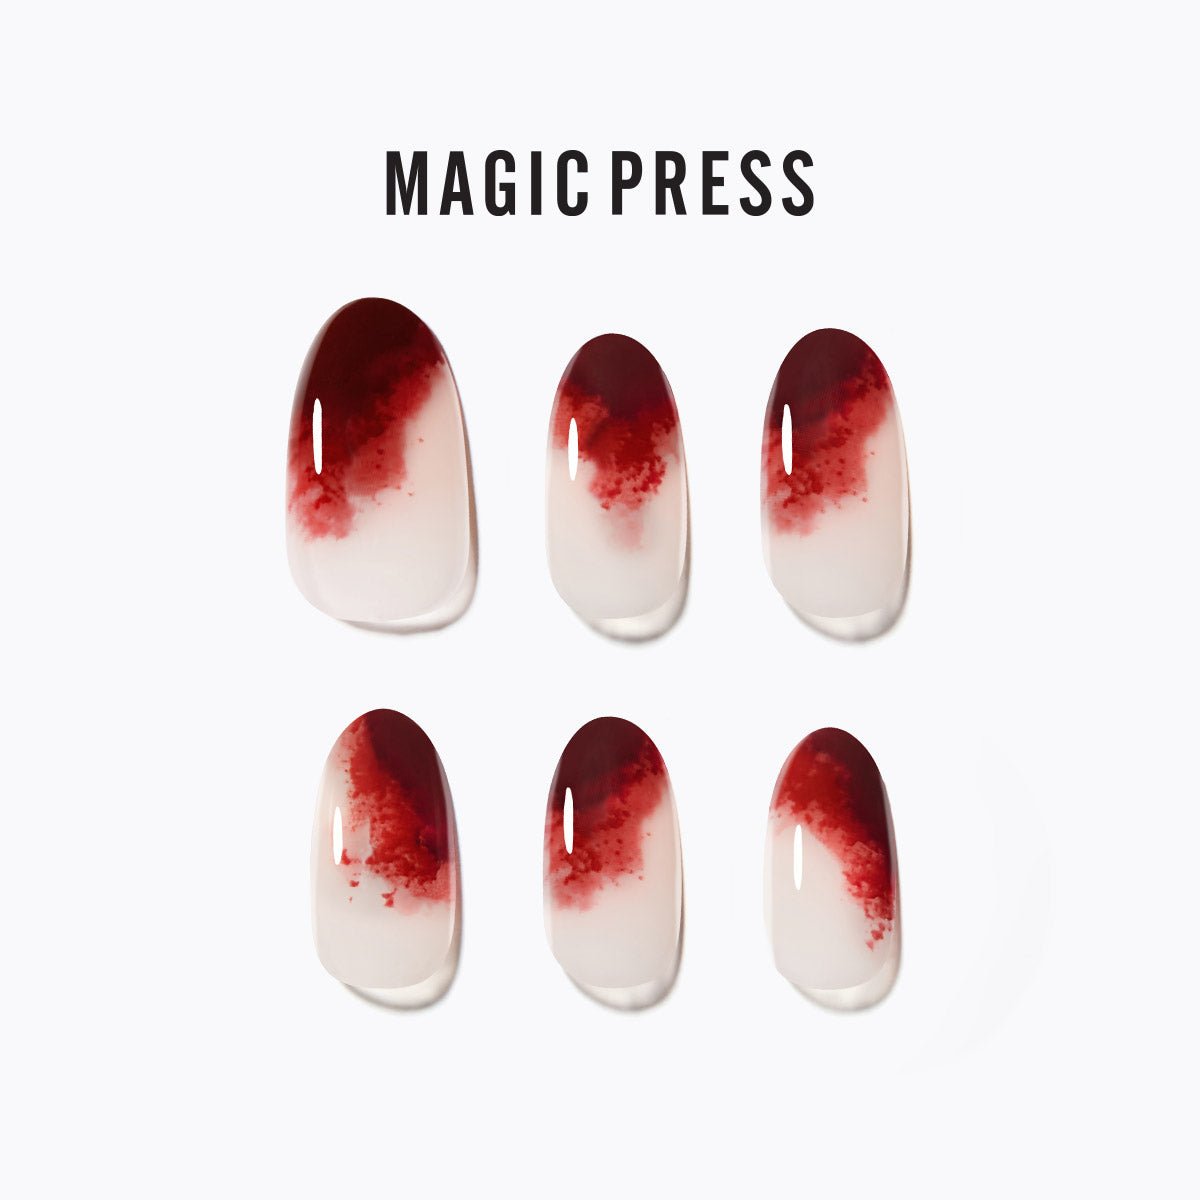 Blood [Halloween Special] - Magic Press Art - Manicure - Dashing Diva Singapore